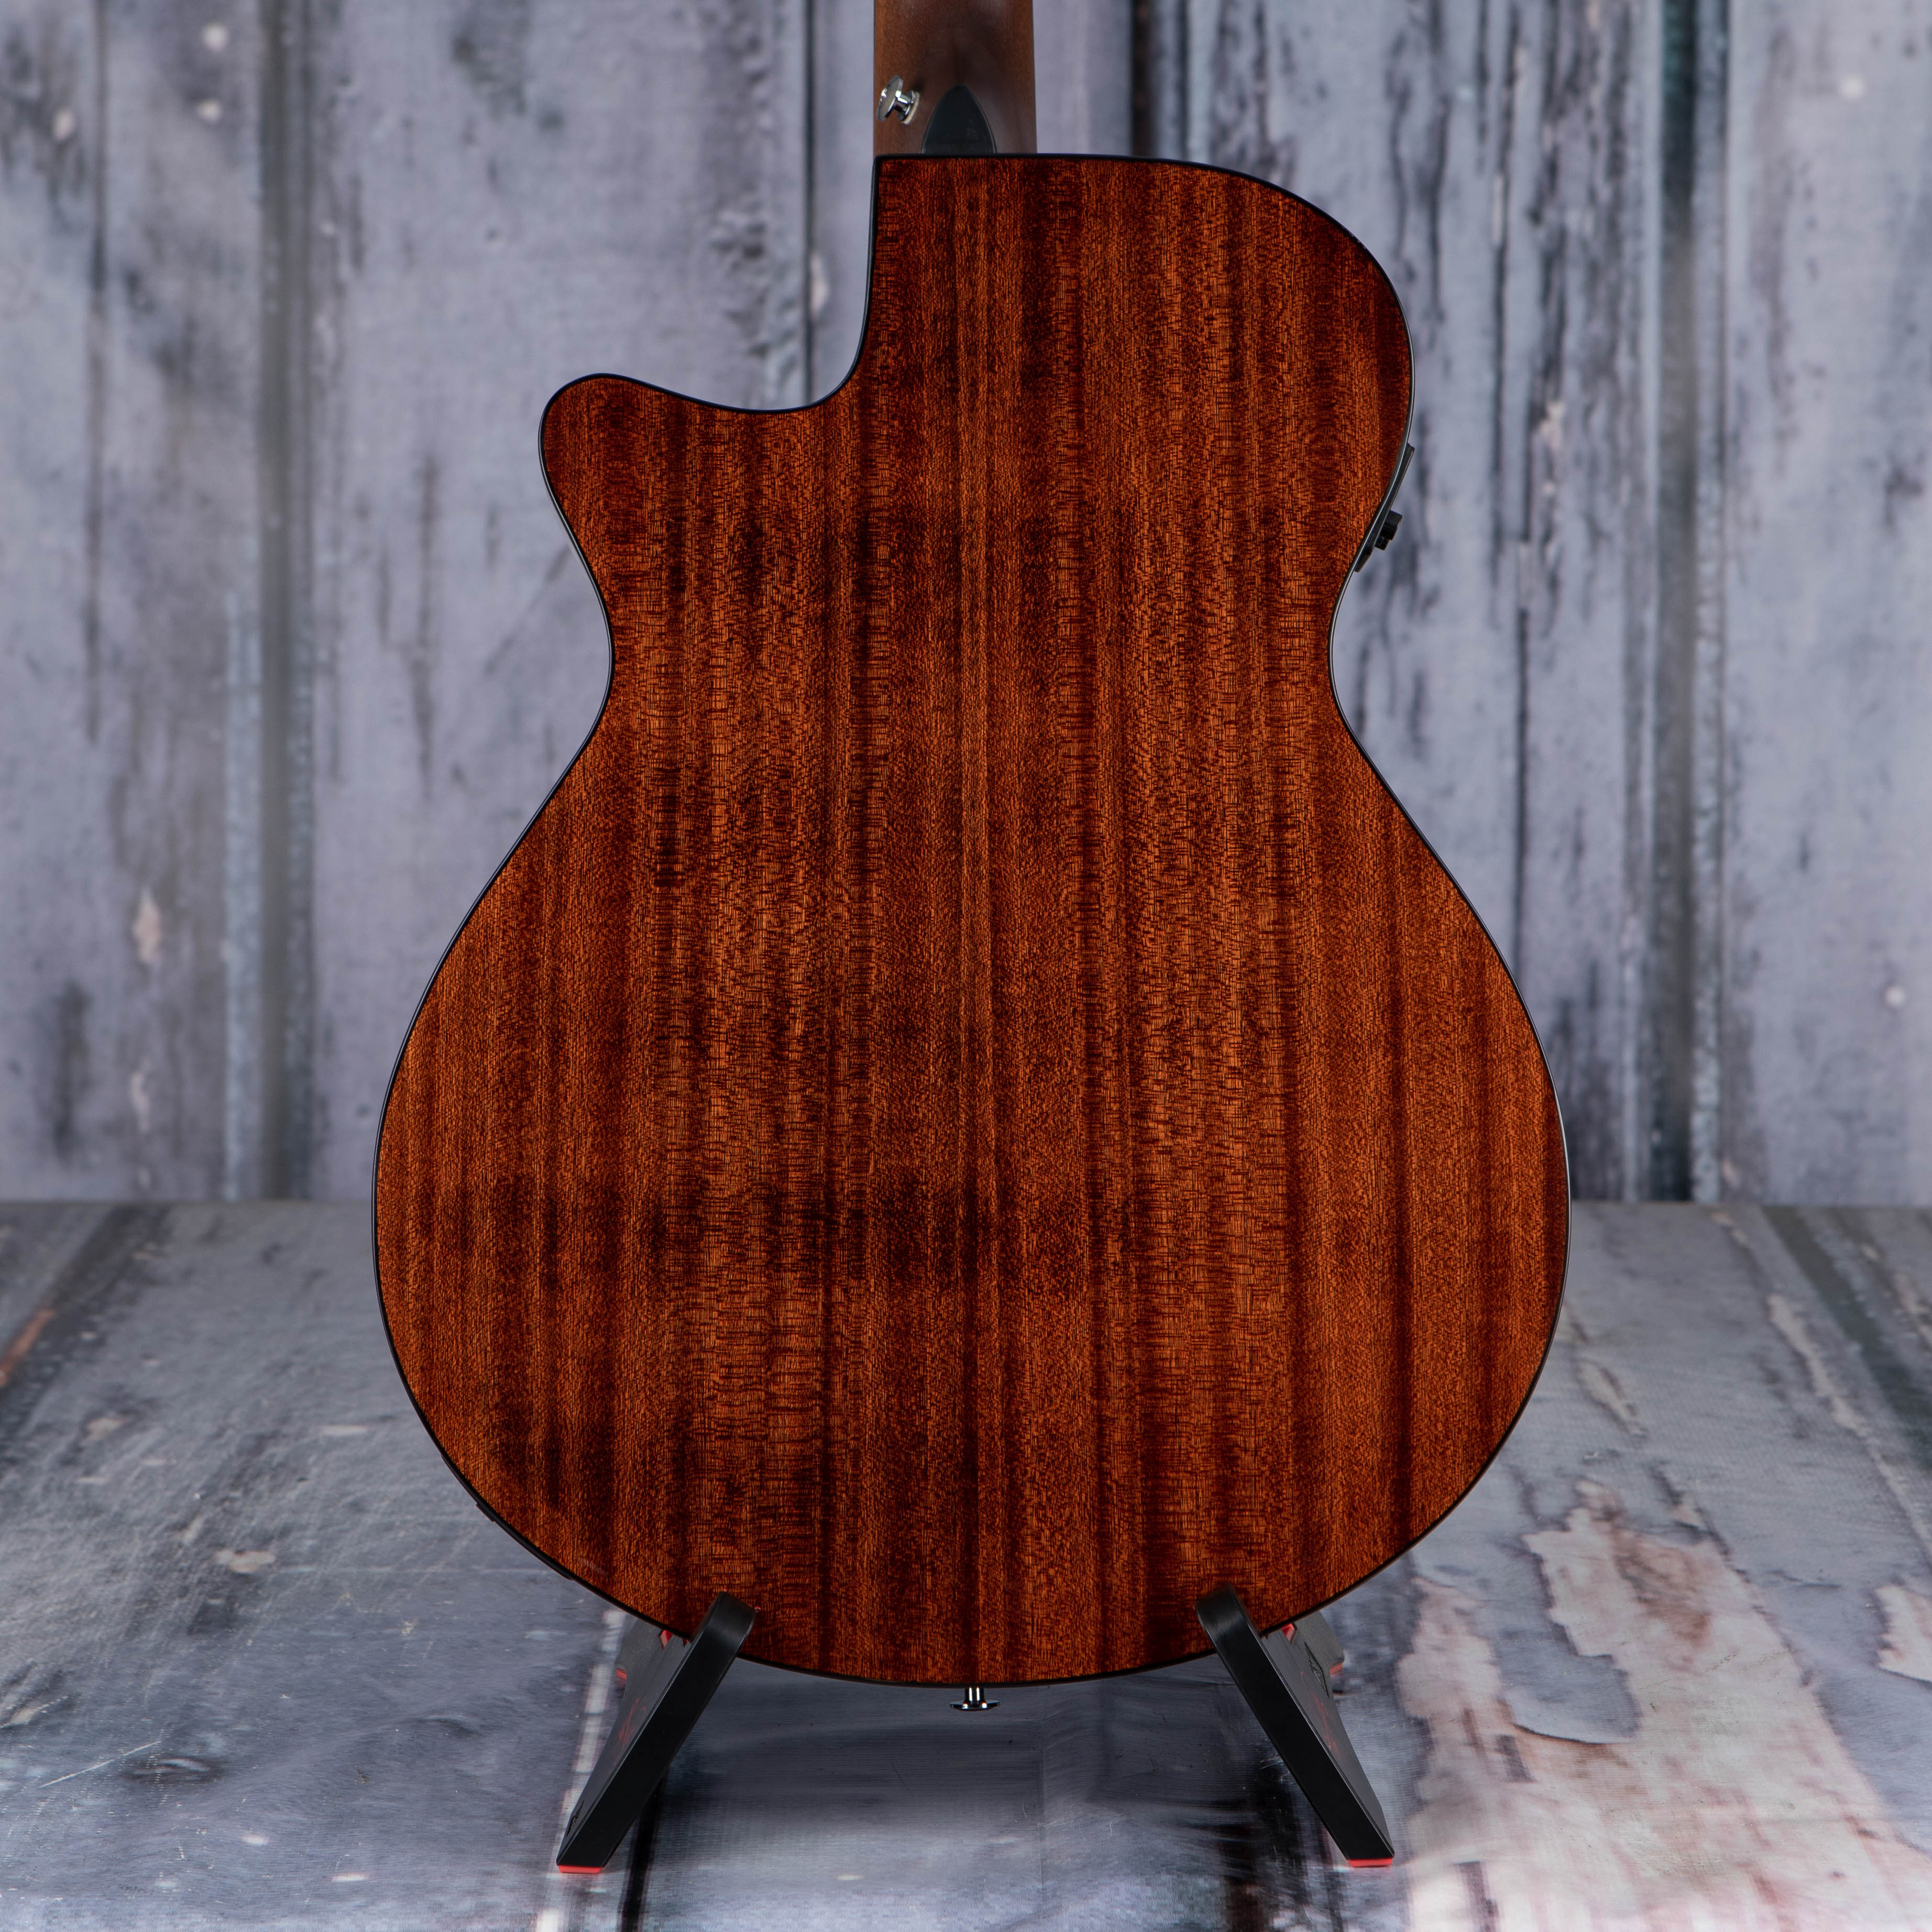 Ibanez AEG62 Acoustic/Electric Guitar, Natural Mahogany High Gloss, back closeup